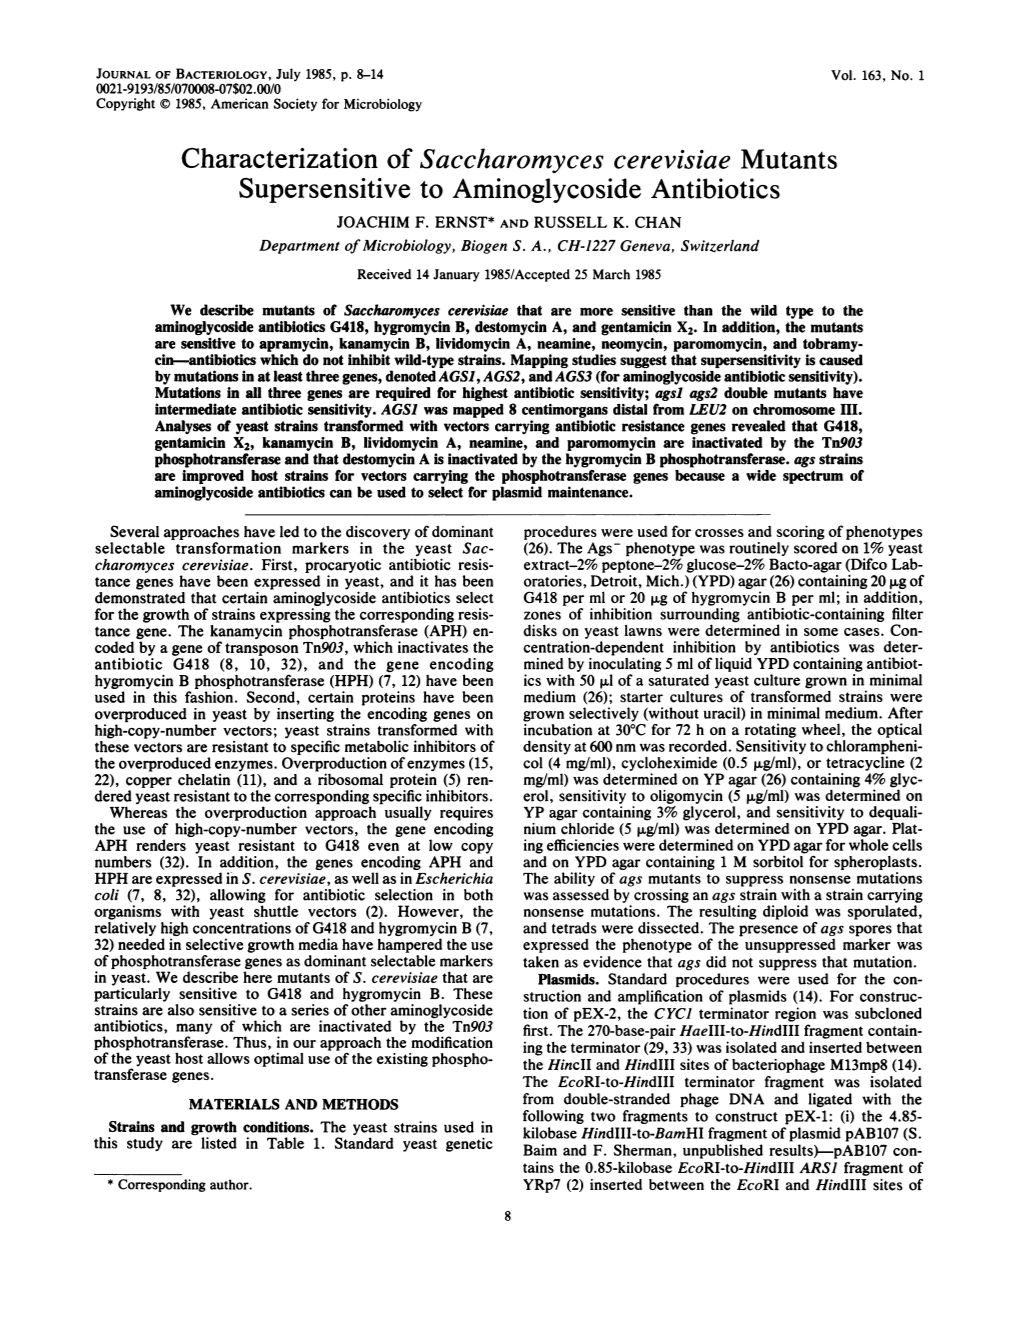 Characterization of Saccharomyces Cerevisiae Mutants Supersensitive to Aminoglycoside Antibiotics JOACHIM F